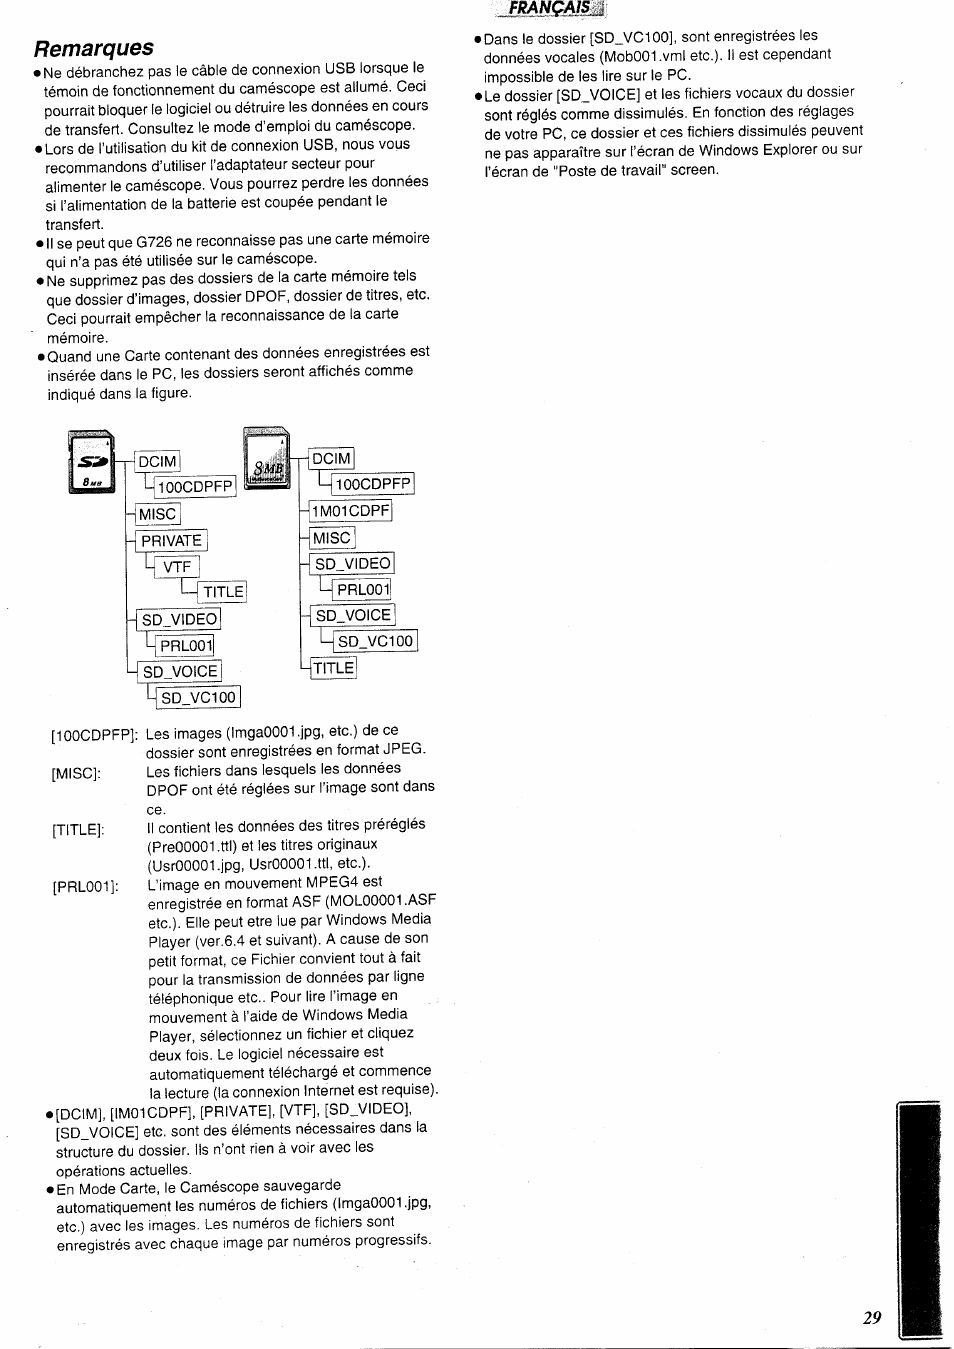 Remarques | Panasonic USBKit Manuel d'utilisation | Page 15 / 29